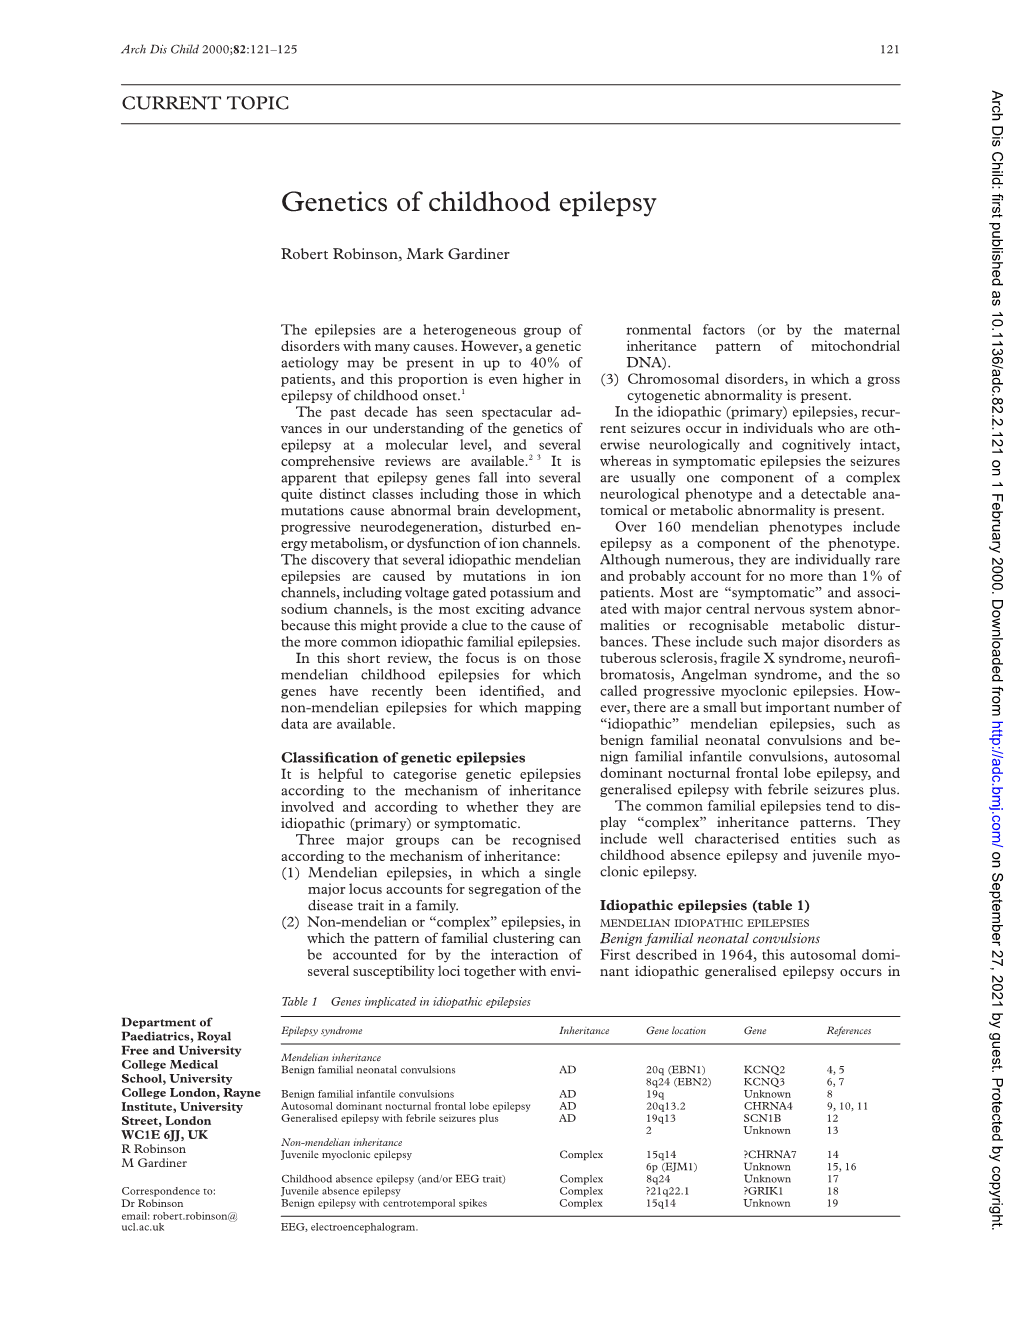 Genetics of Childhood Epilepsy